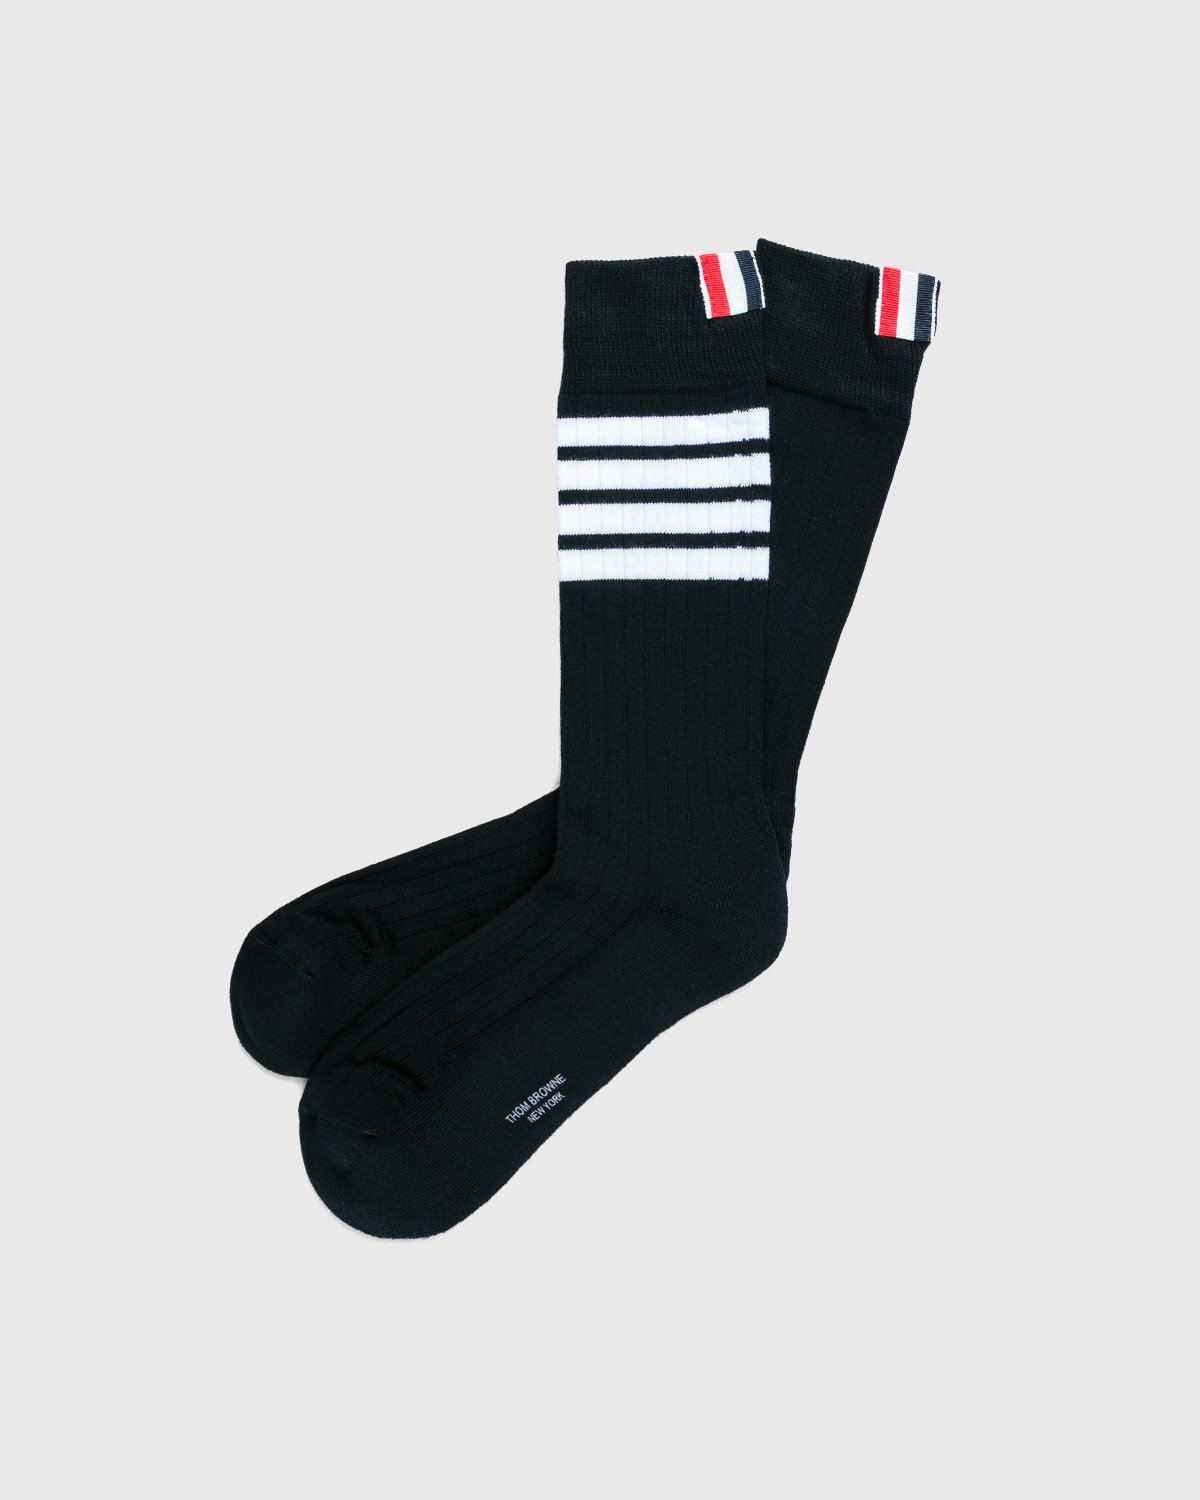 Thom Browne x Highsnobiety - Men's Mid-Calf Socks Grey - Accessories - Grey - Image 2